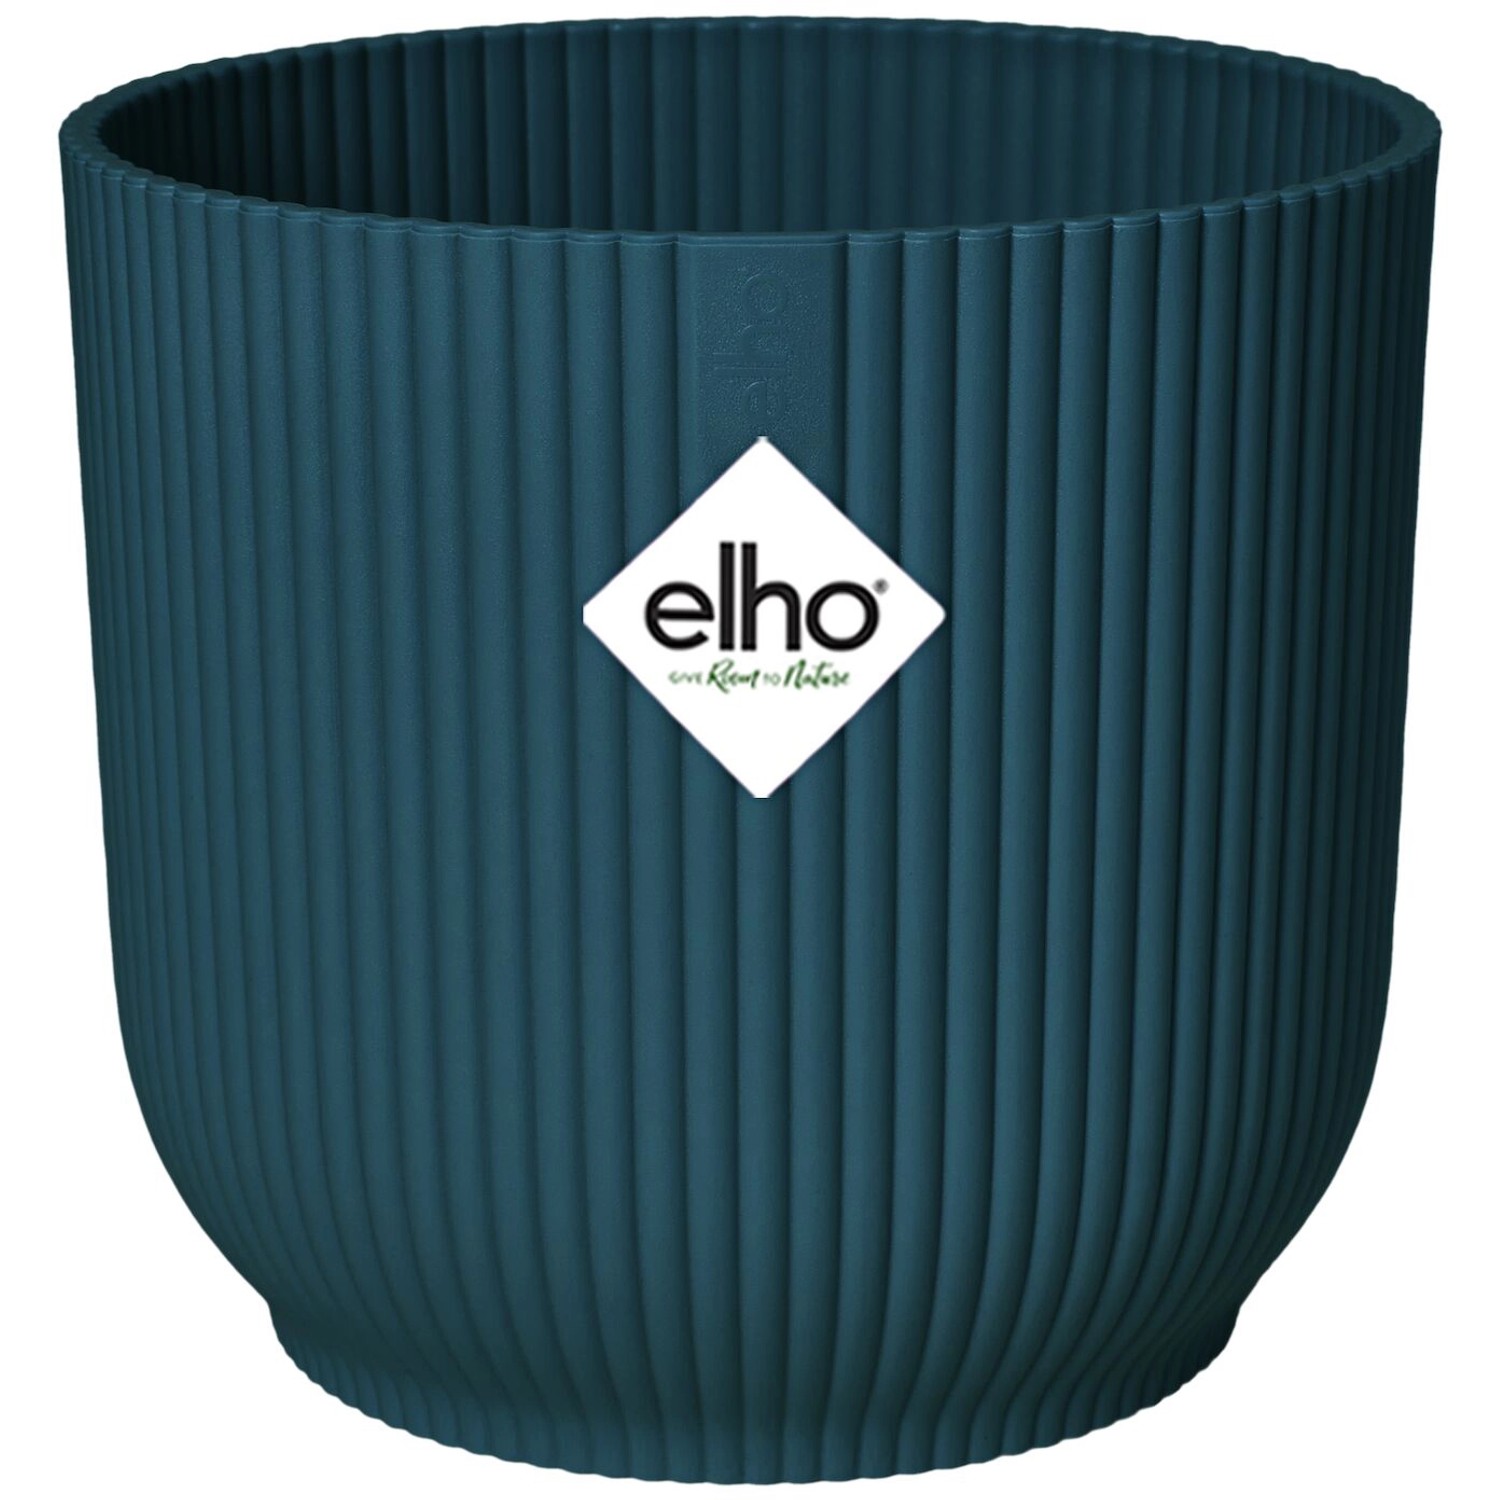 Elho Blumentopf Vibes Fold mit Rollen Ø 34,9 cm Tiefblau von Elho